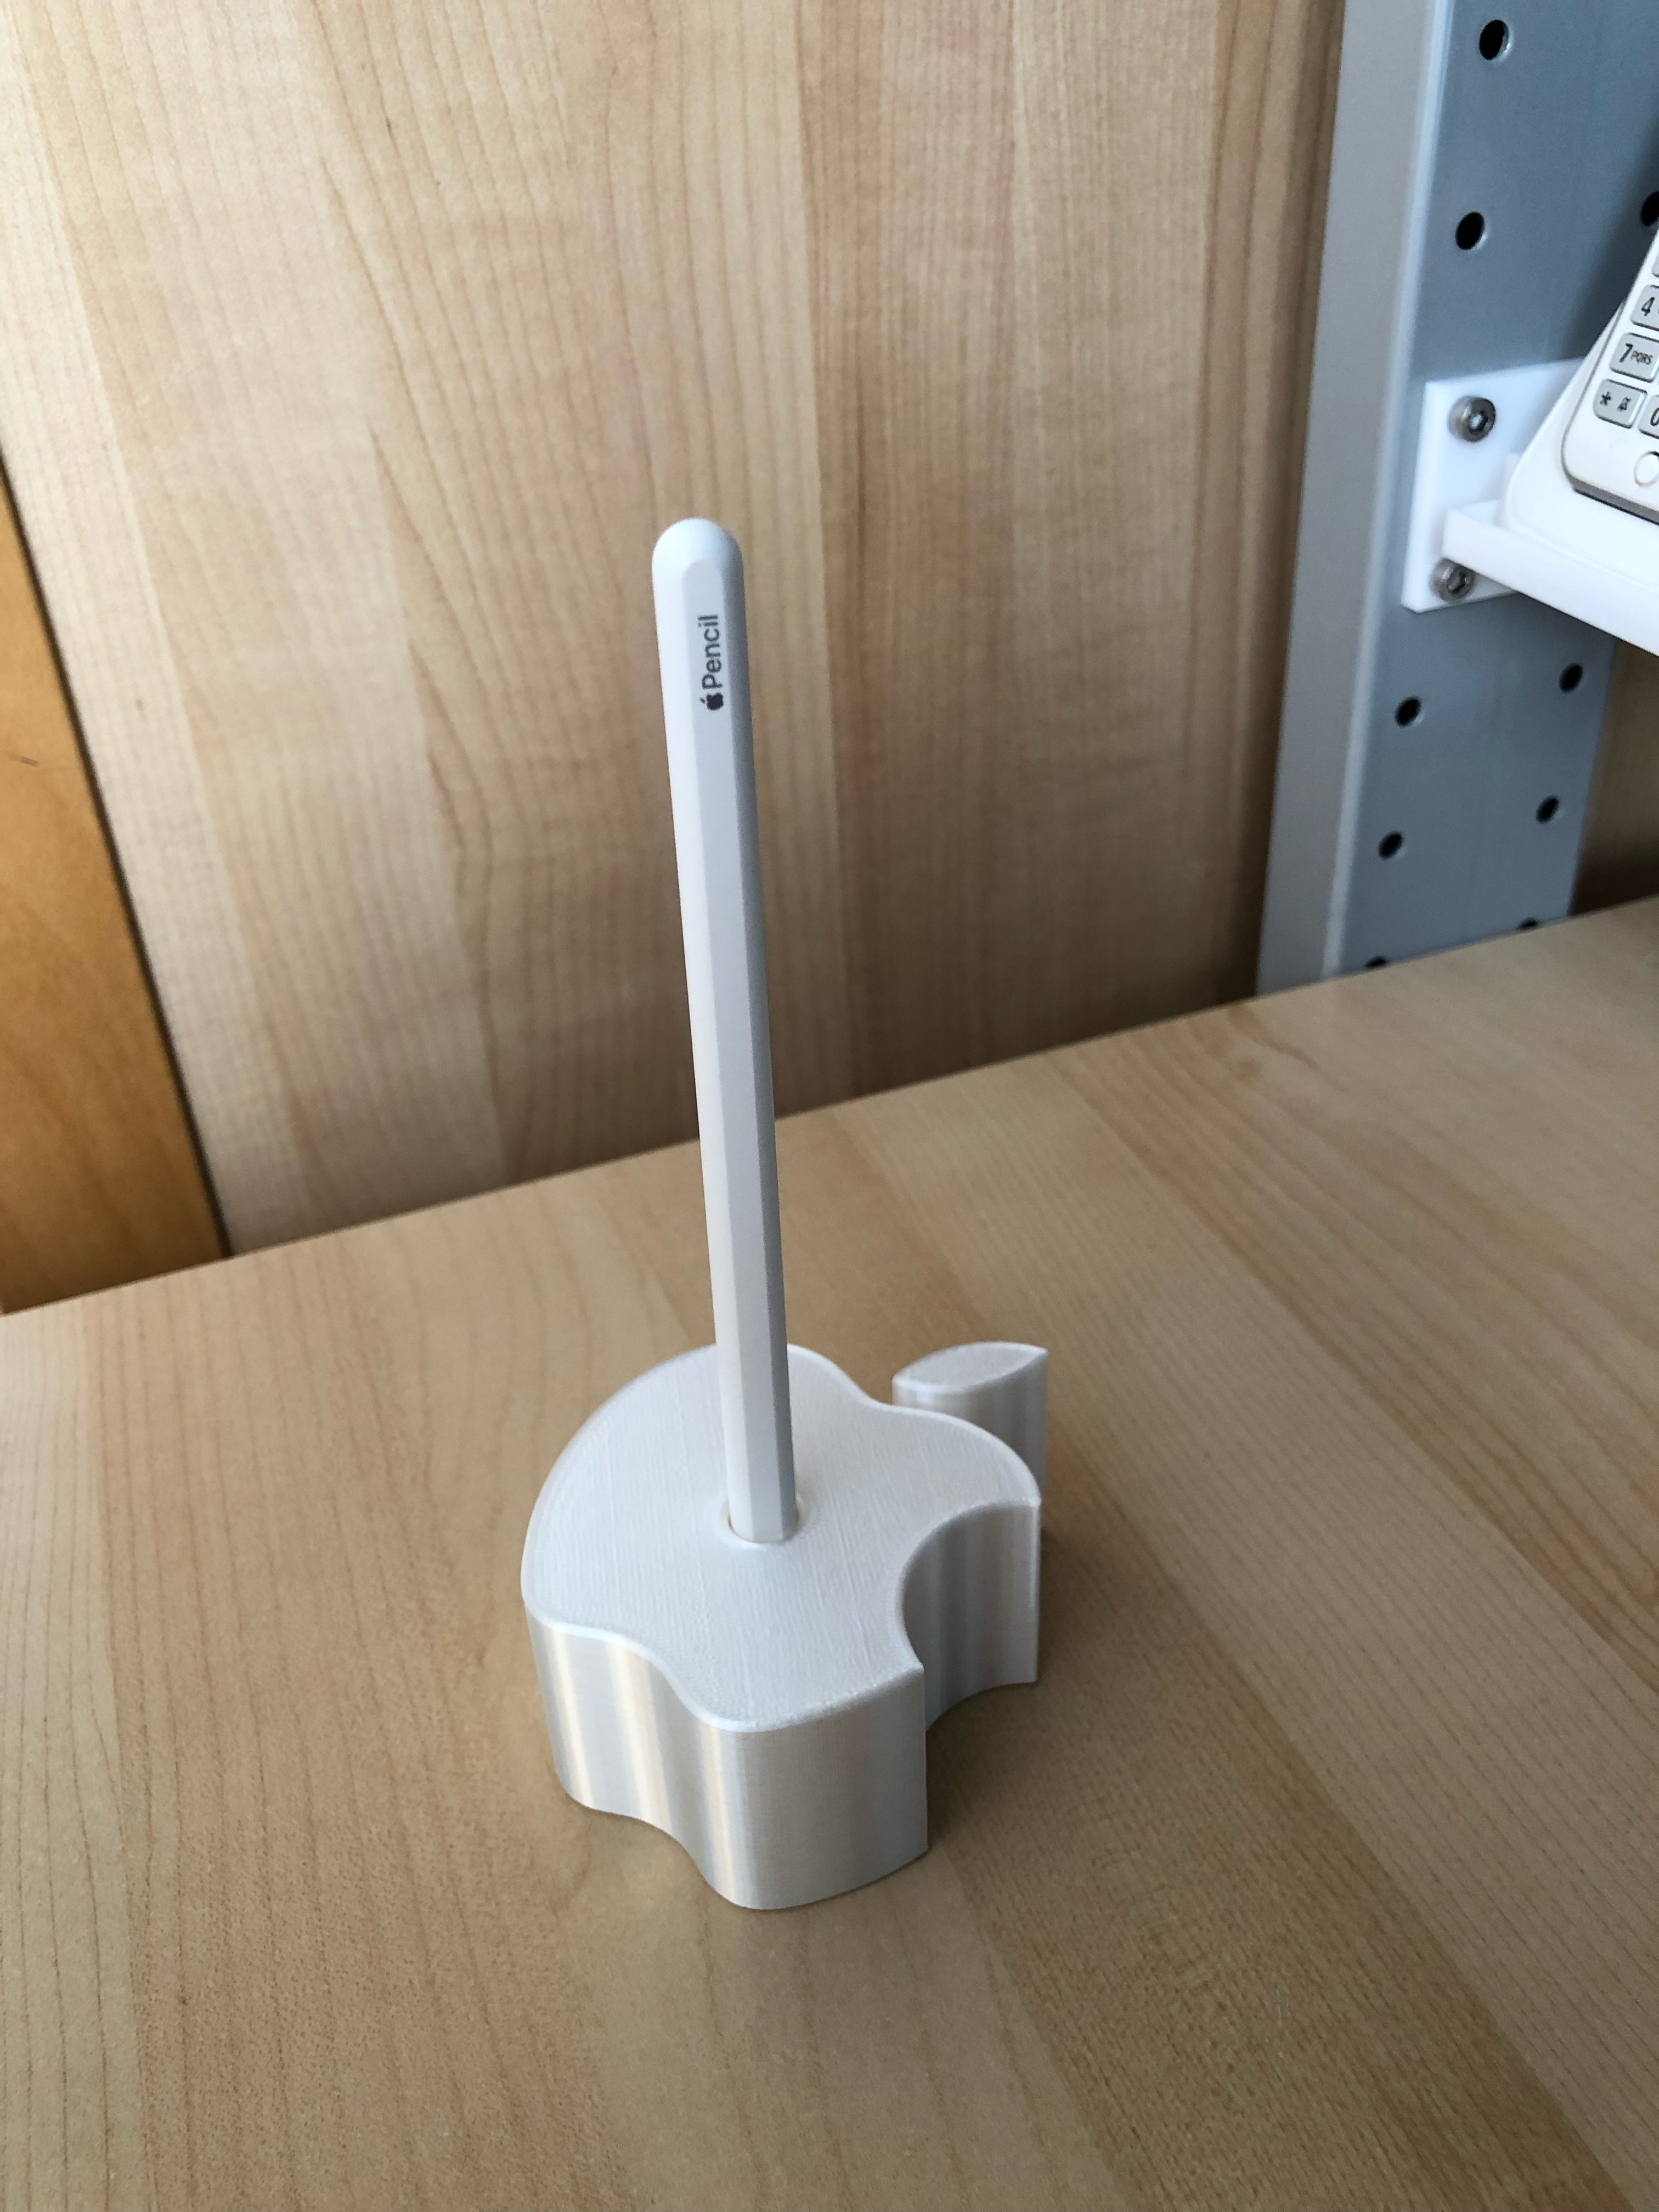 Apple Pencil holder